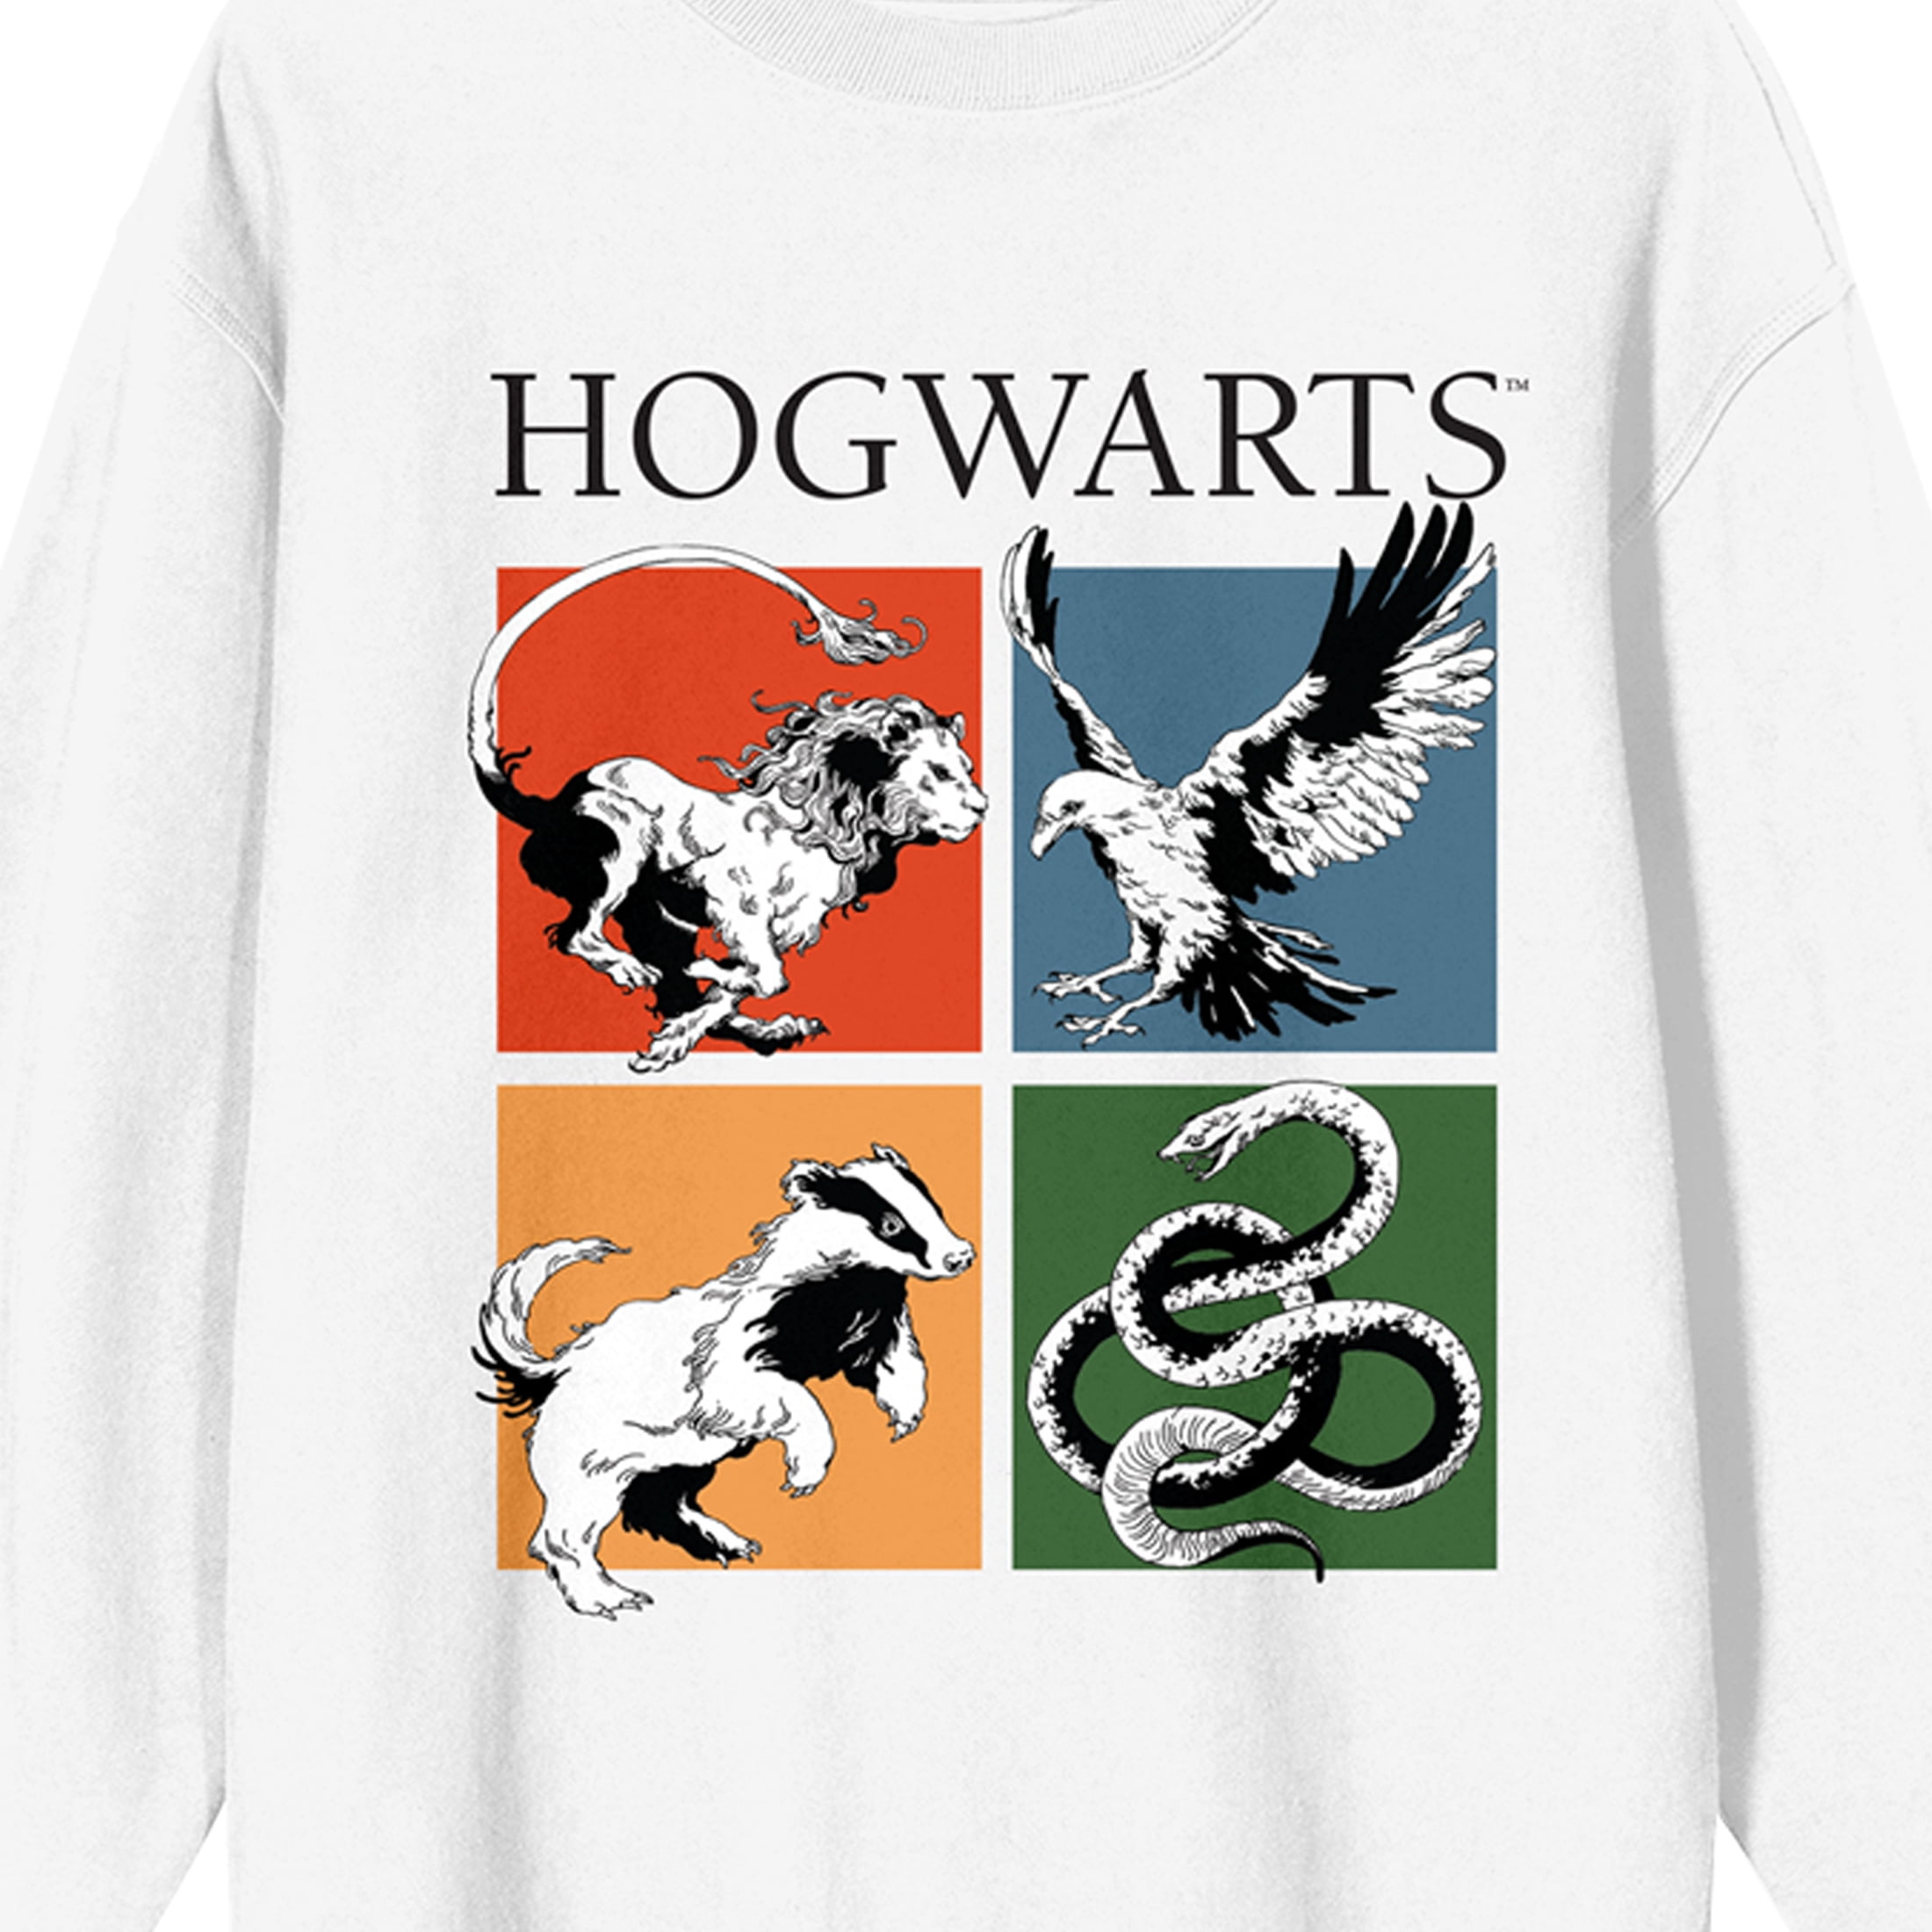 Harry Potter Hogwarts House Crests Women's White Crew Neck Sweatshirt-XXL